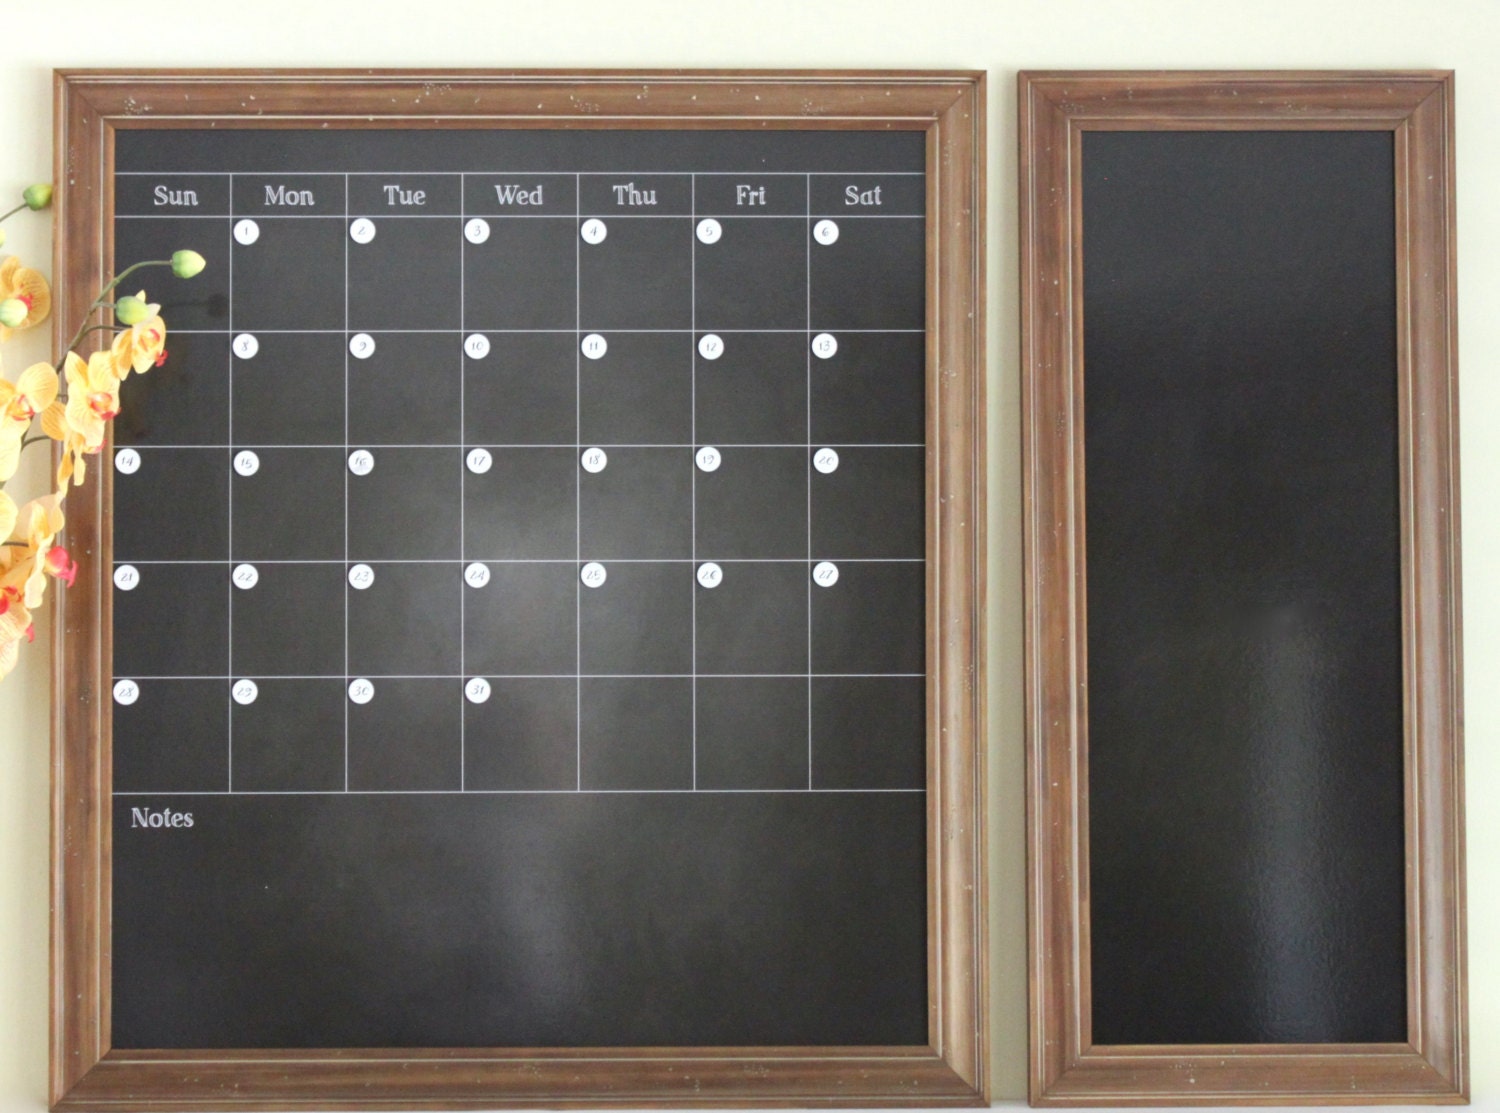 Chalkboard Calendar Framed Chalkboard with notes